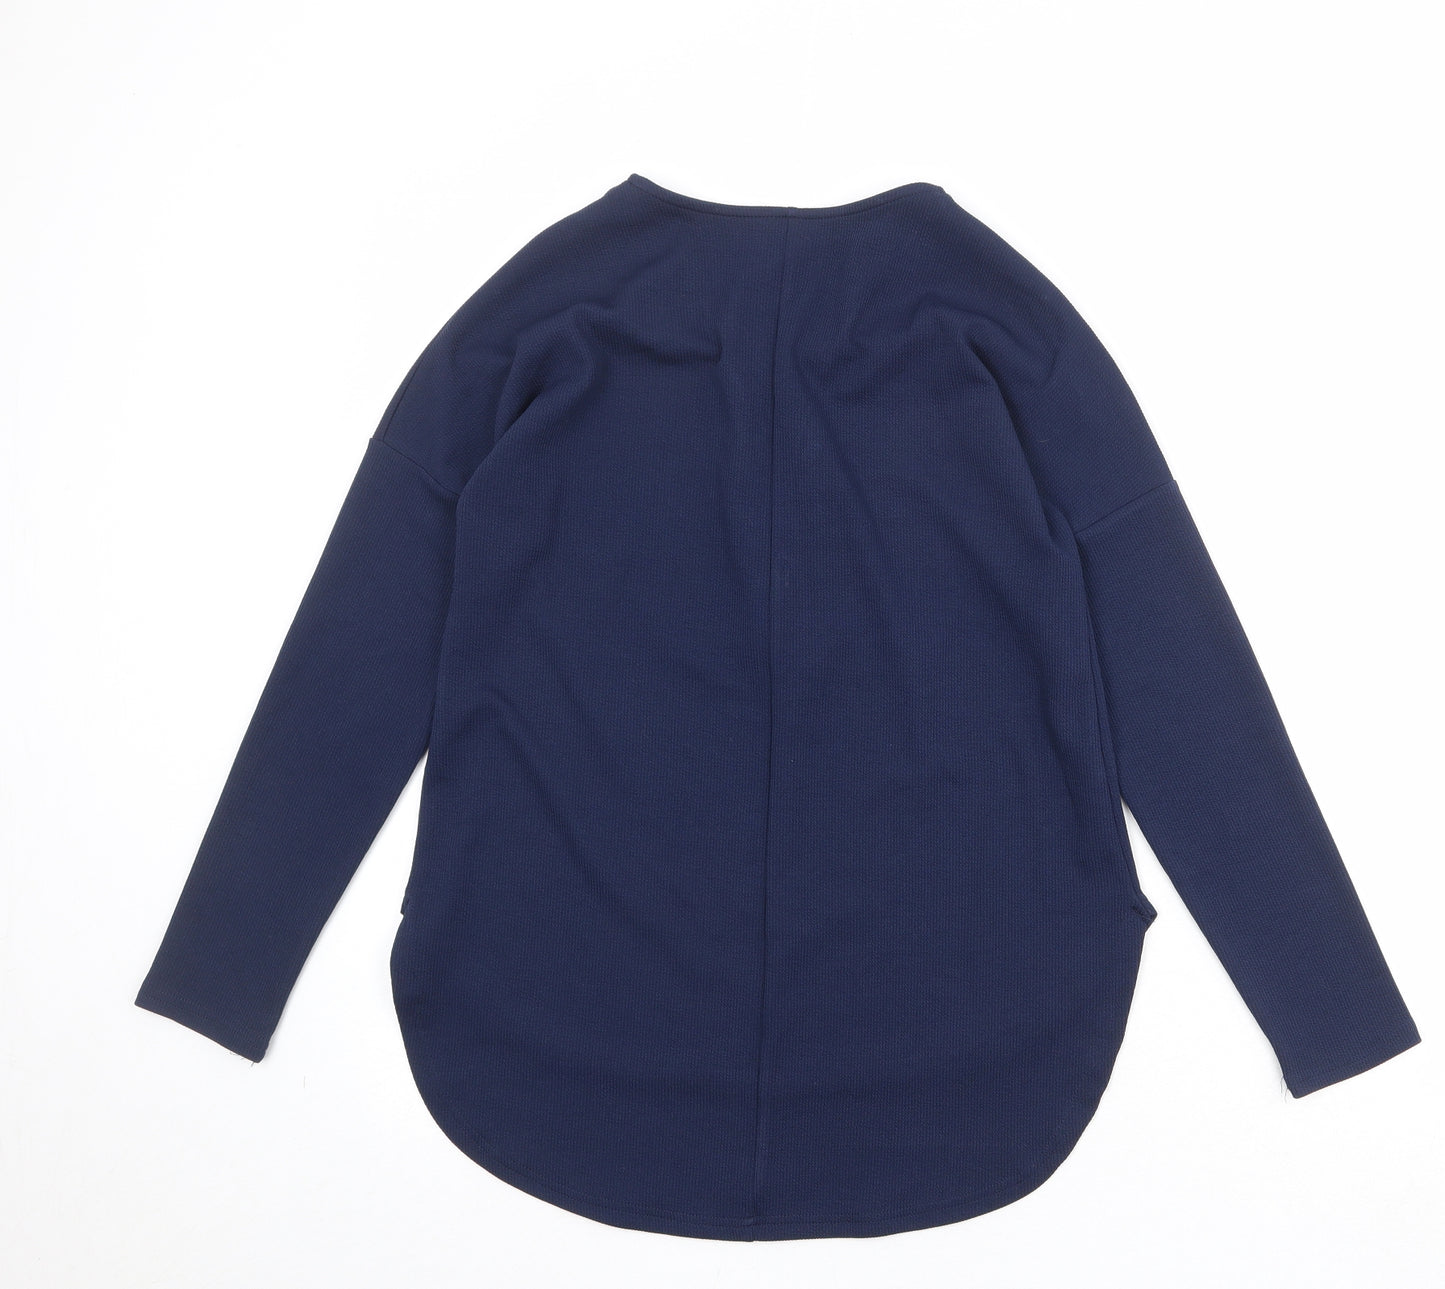 Stella Womens Blue Polyester Basic Blouse Size 8 V-Neck